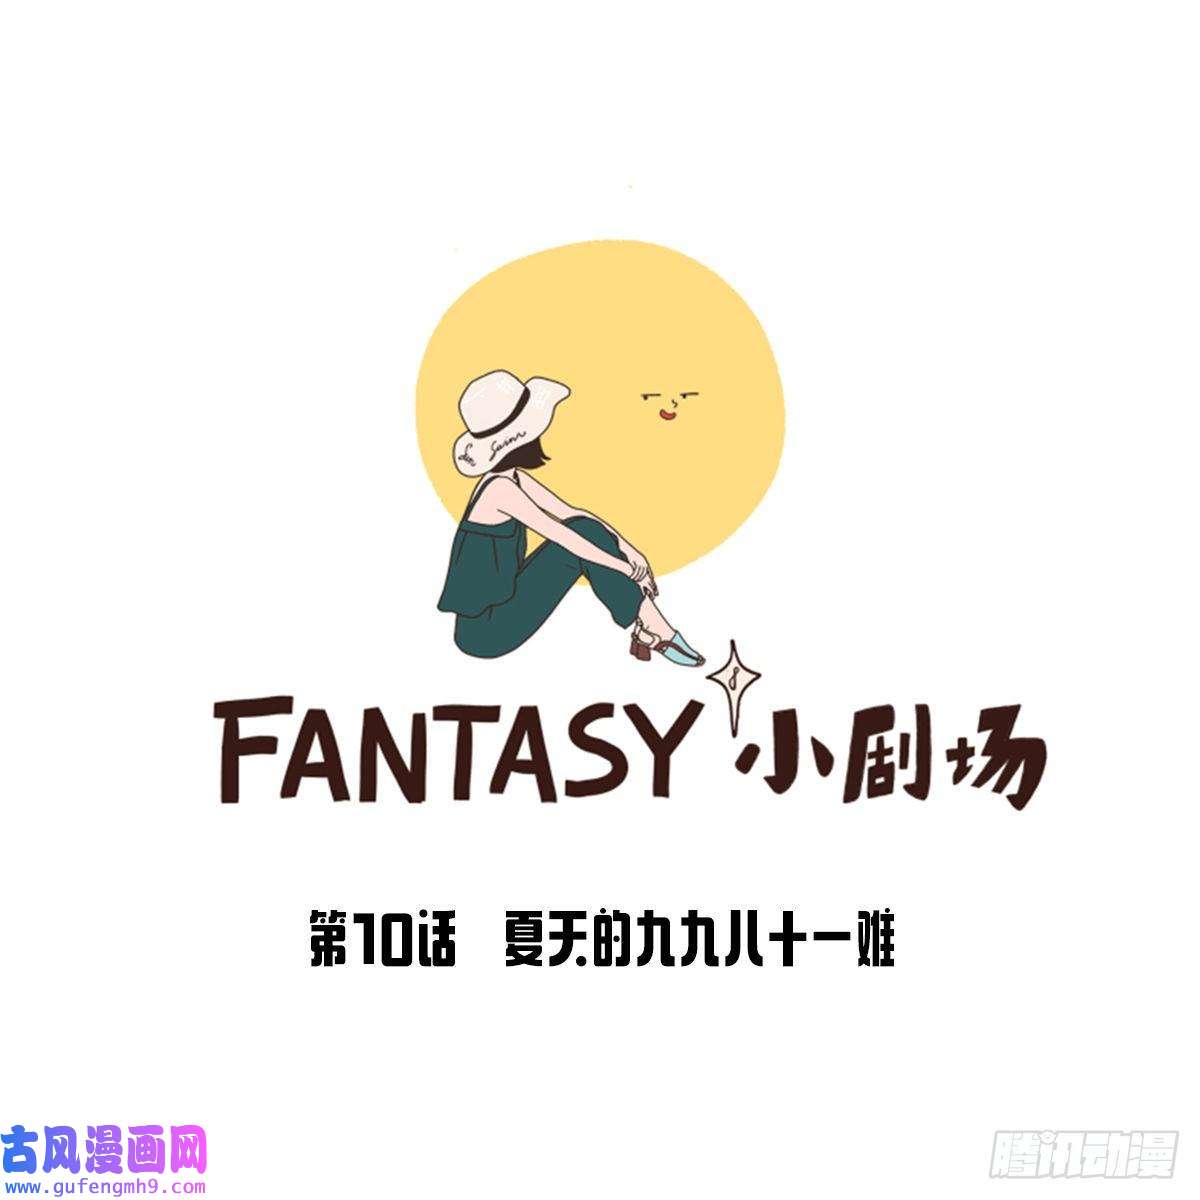 Fantasy小剧场夏天九九八十一难